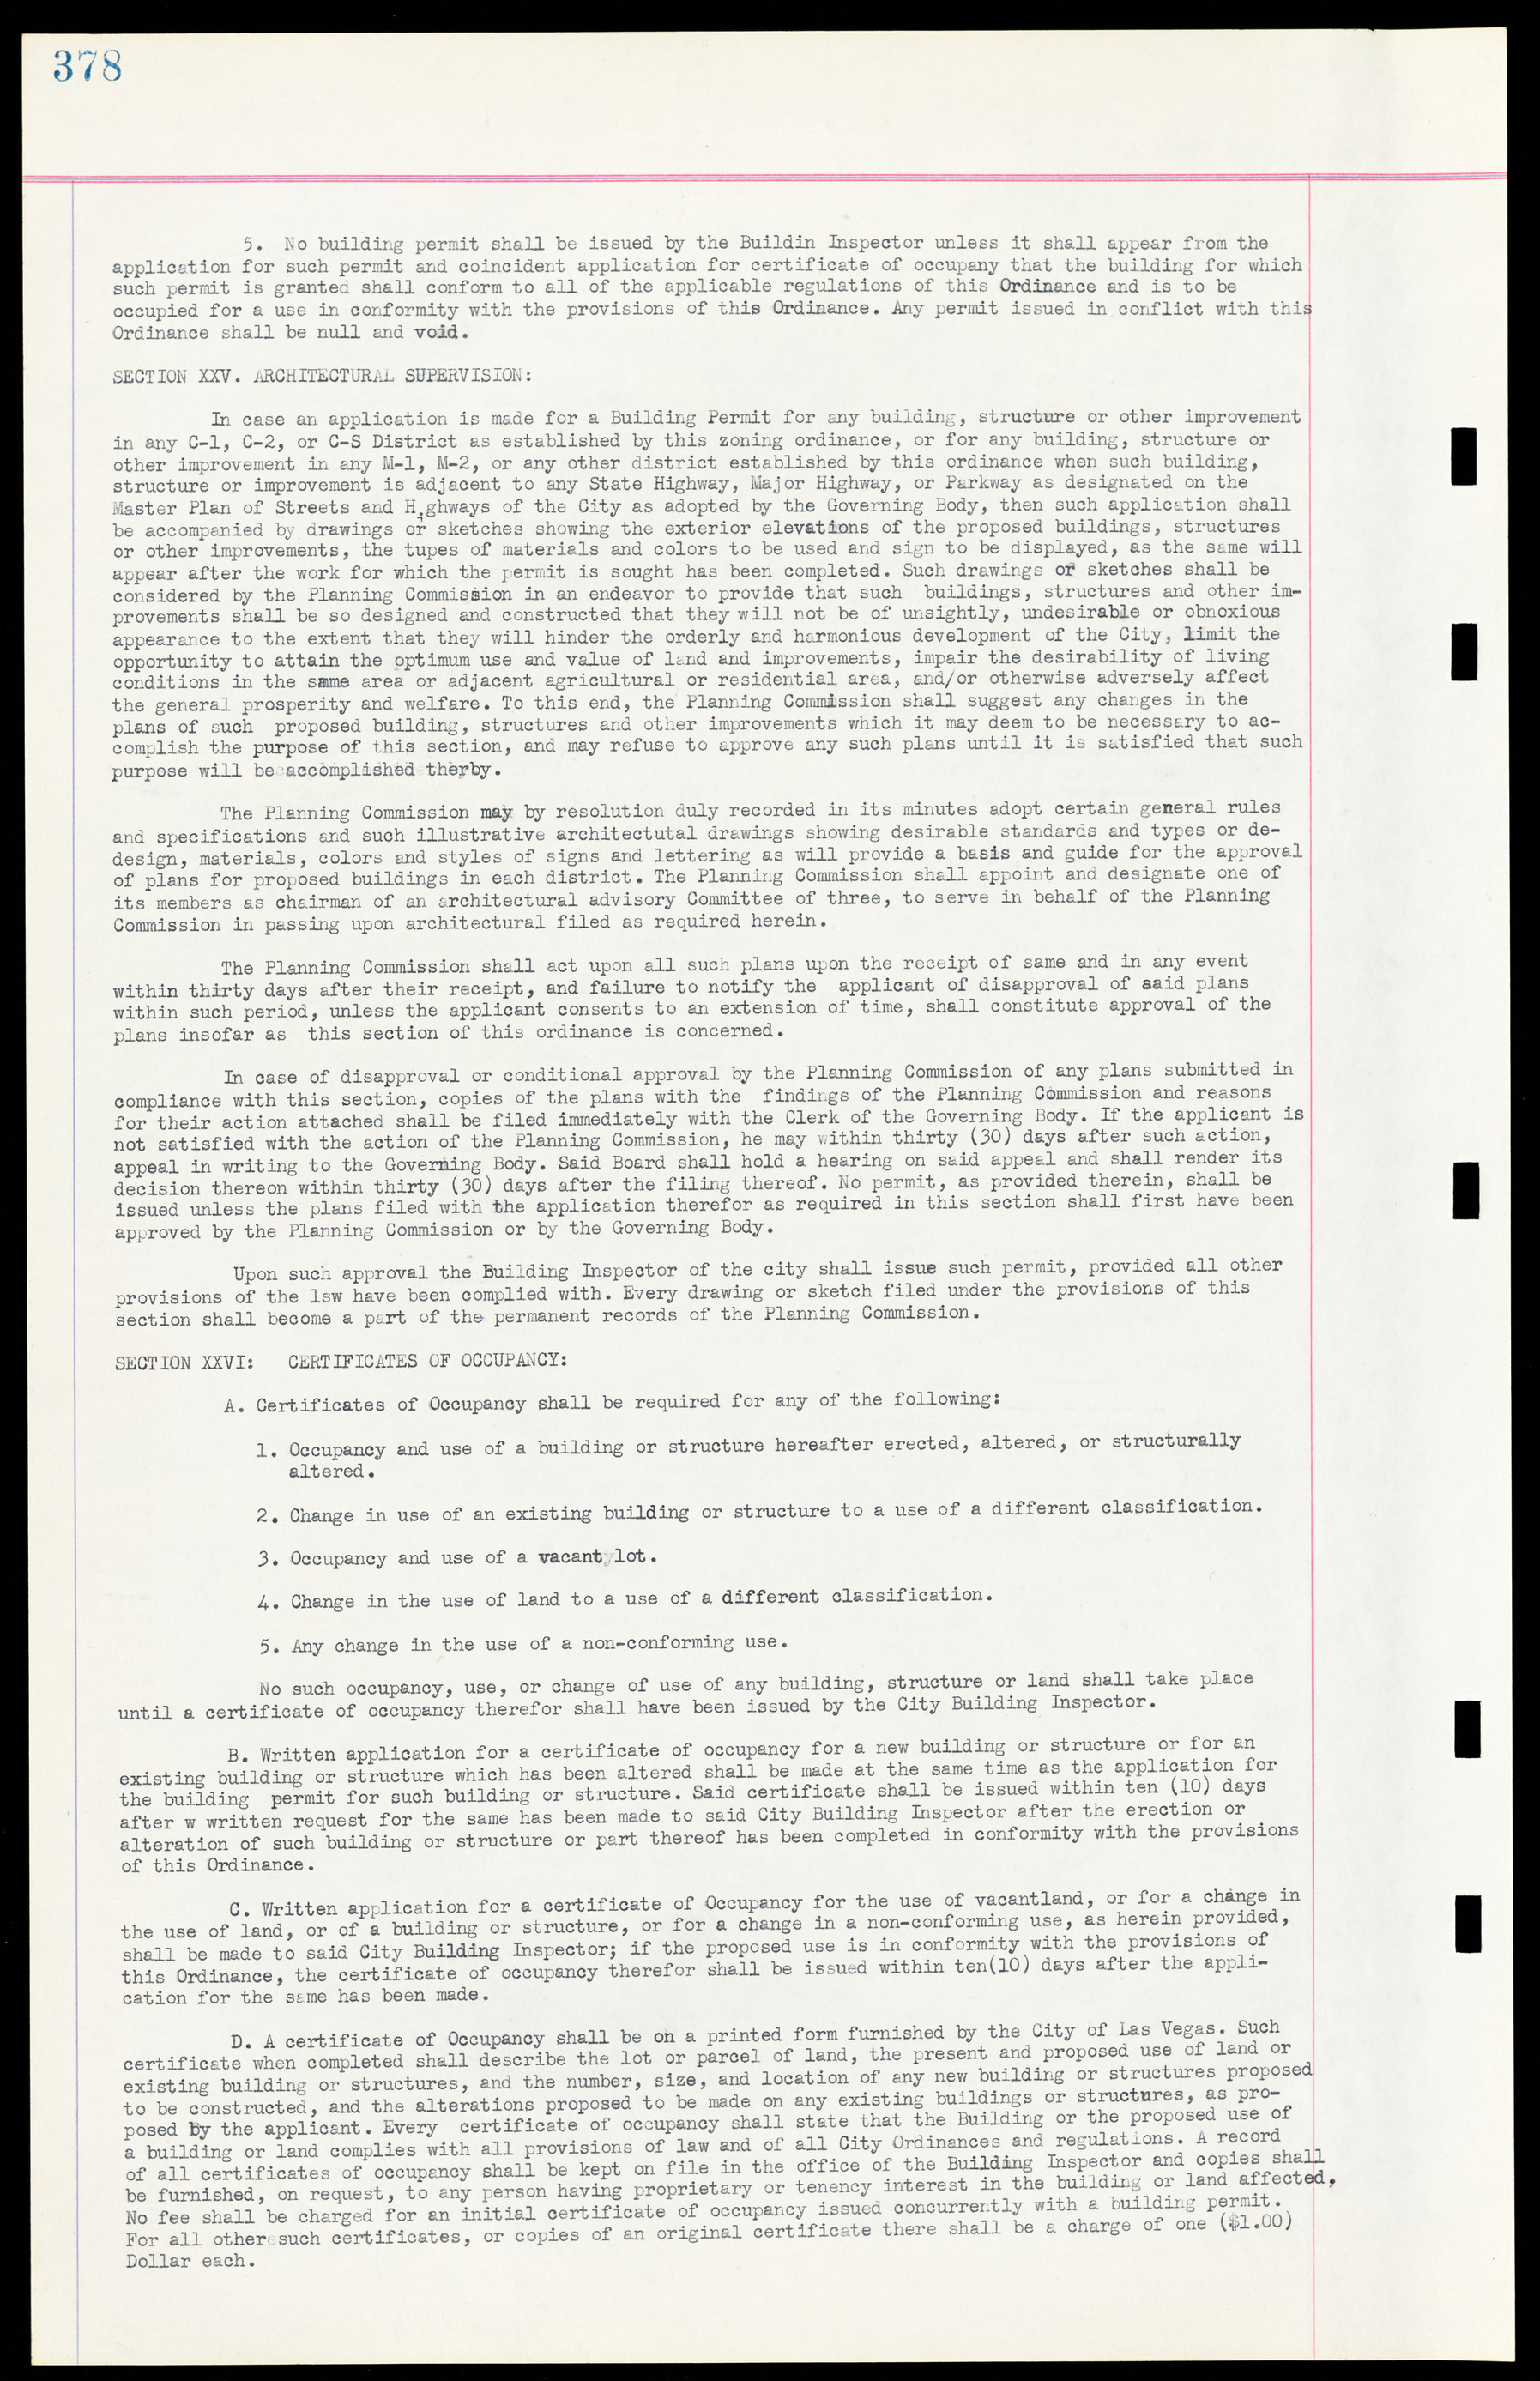 Las Vegas City Ordinances, March 31, 1933 to October 25, 1950, lvc000014-407